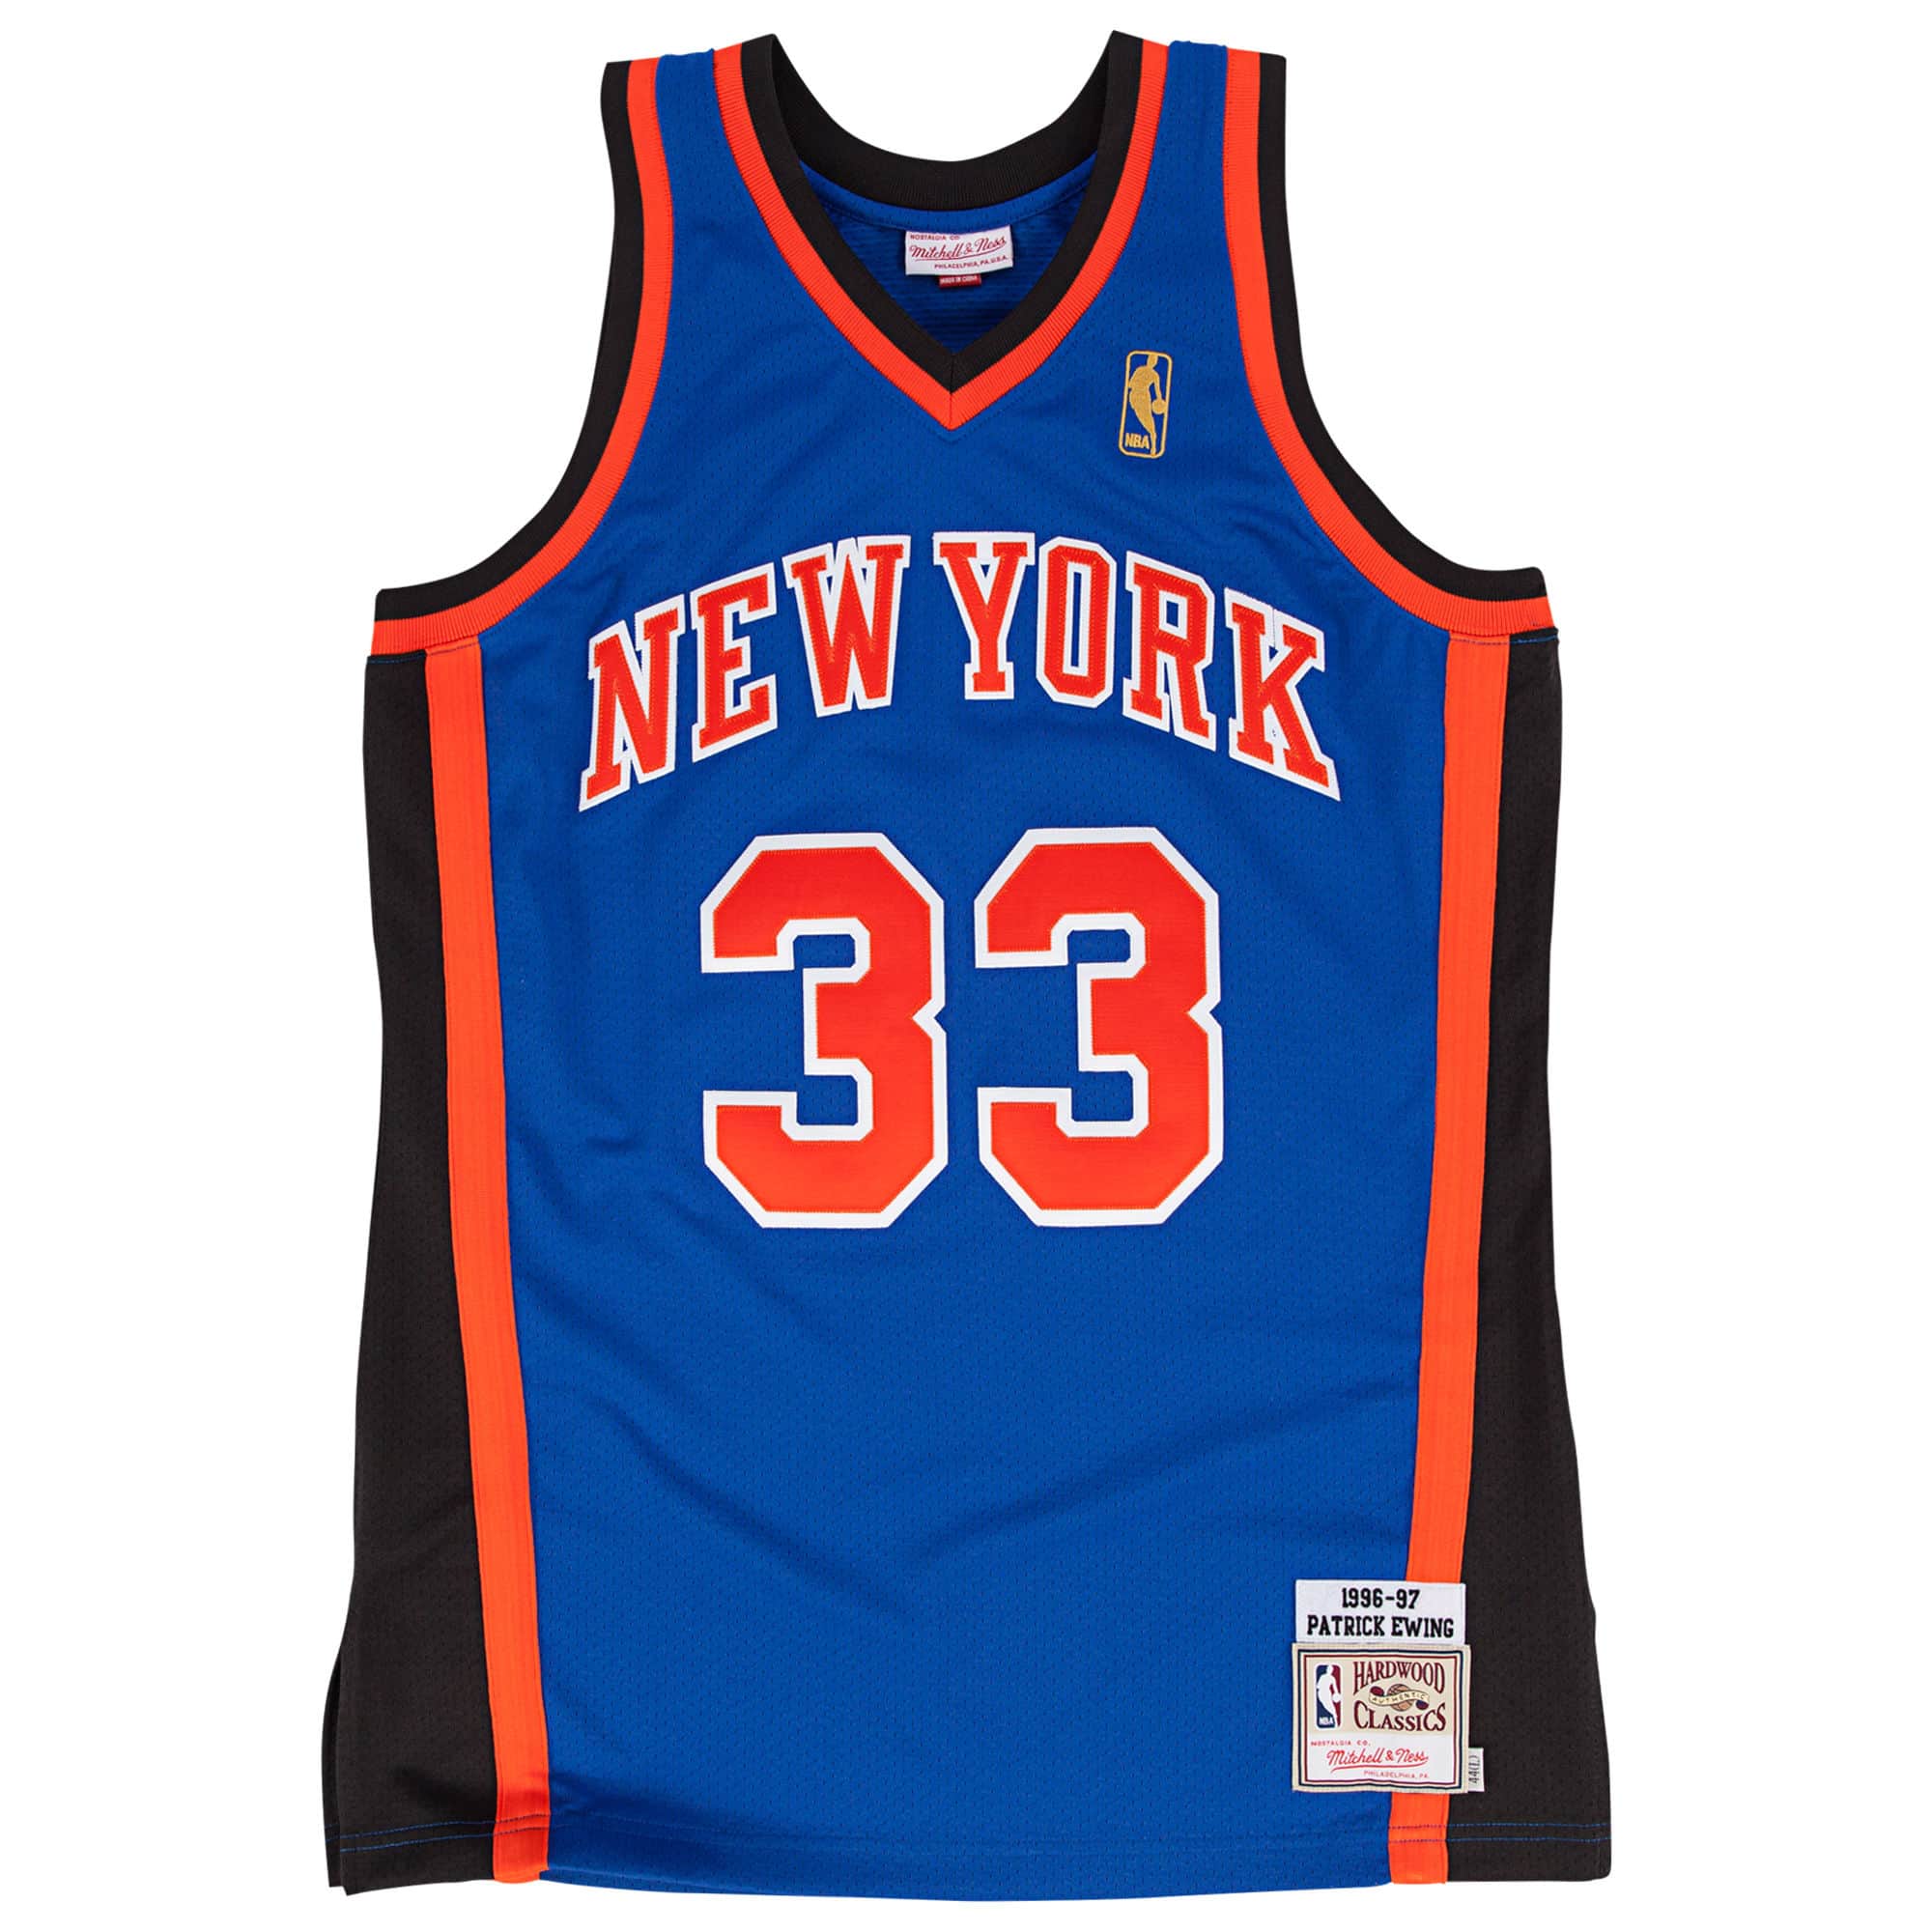 Patrick Ewing 1996-97 Jersey New York Knicks